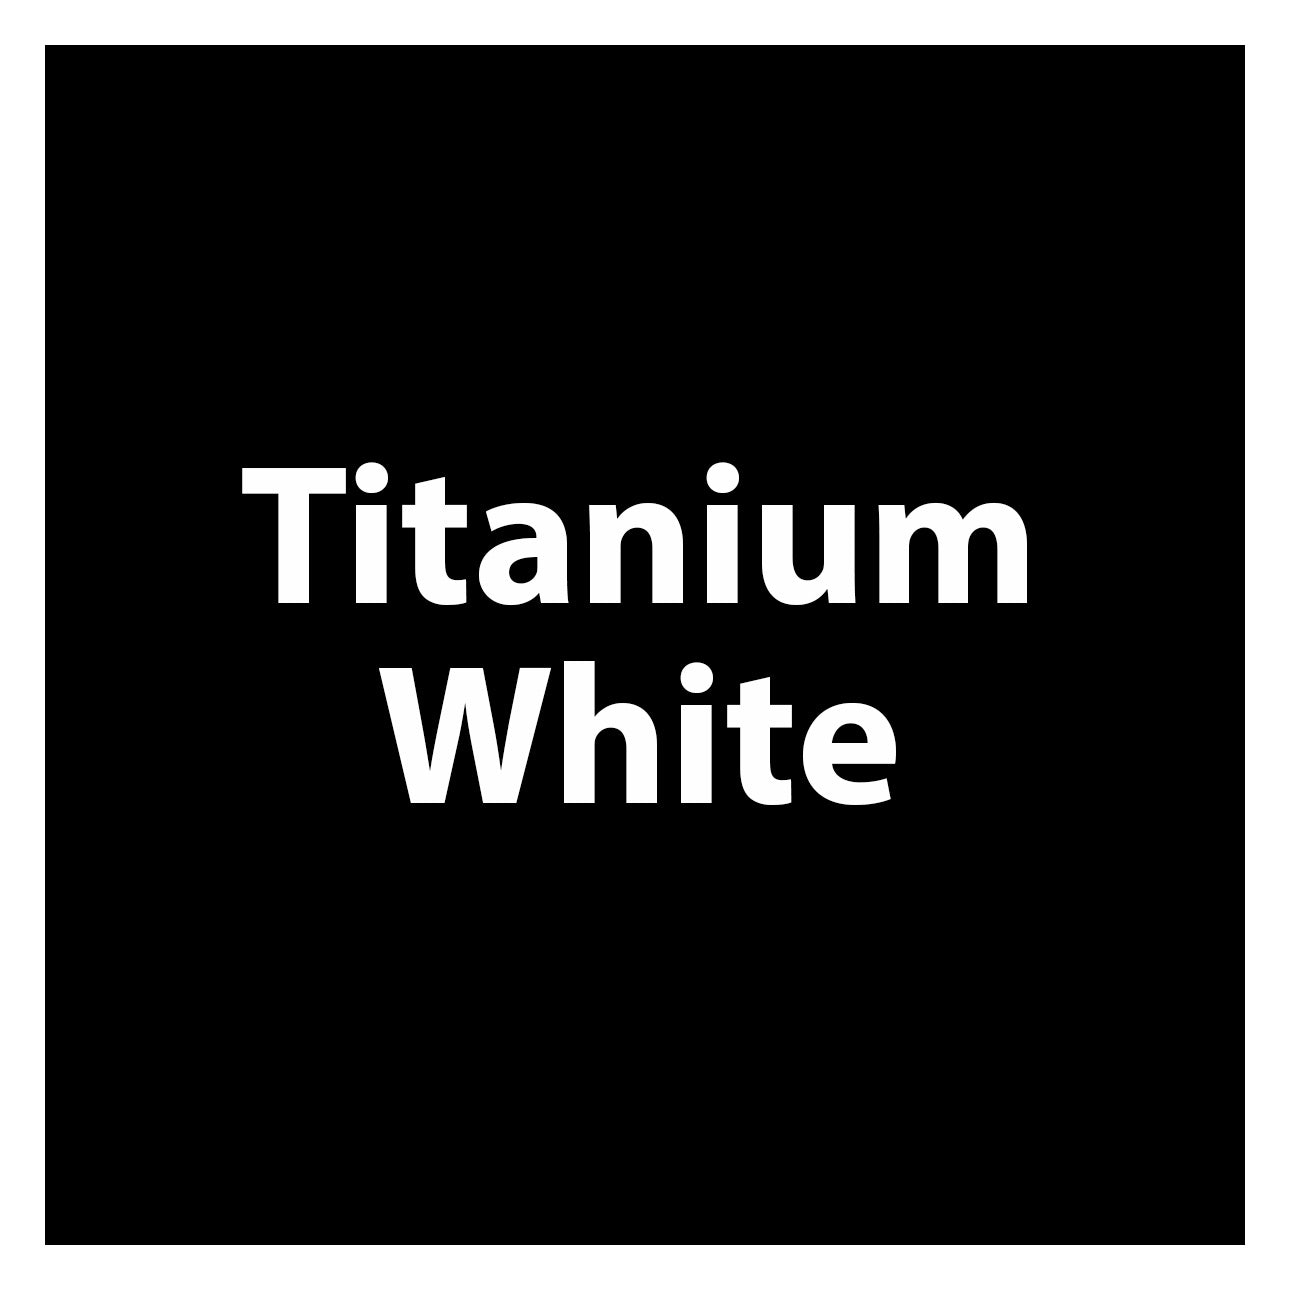 Titanium White Acrylic Paint